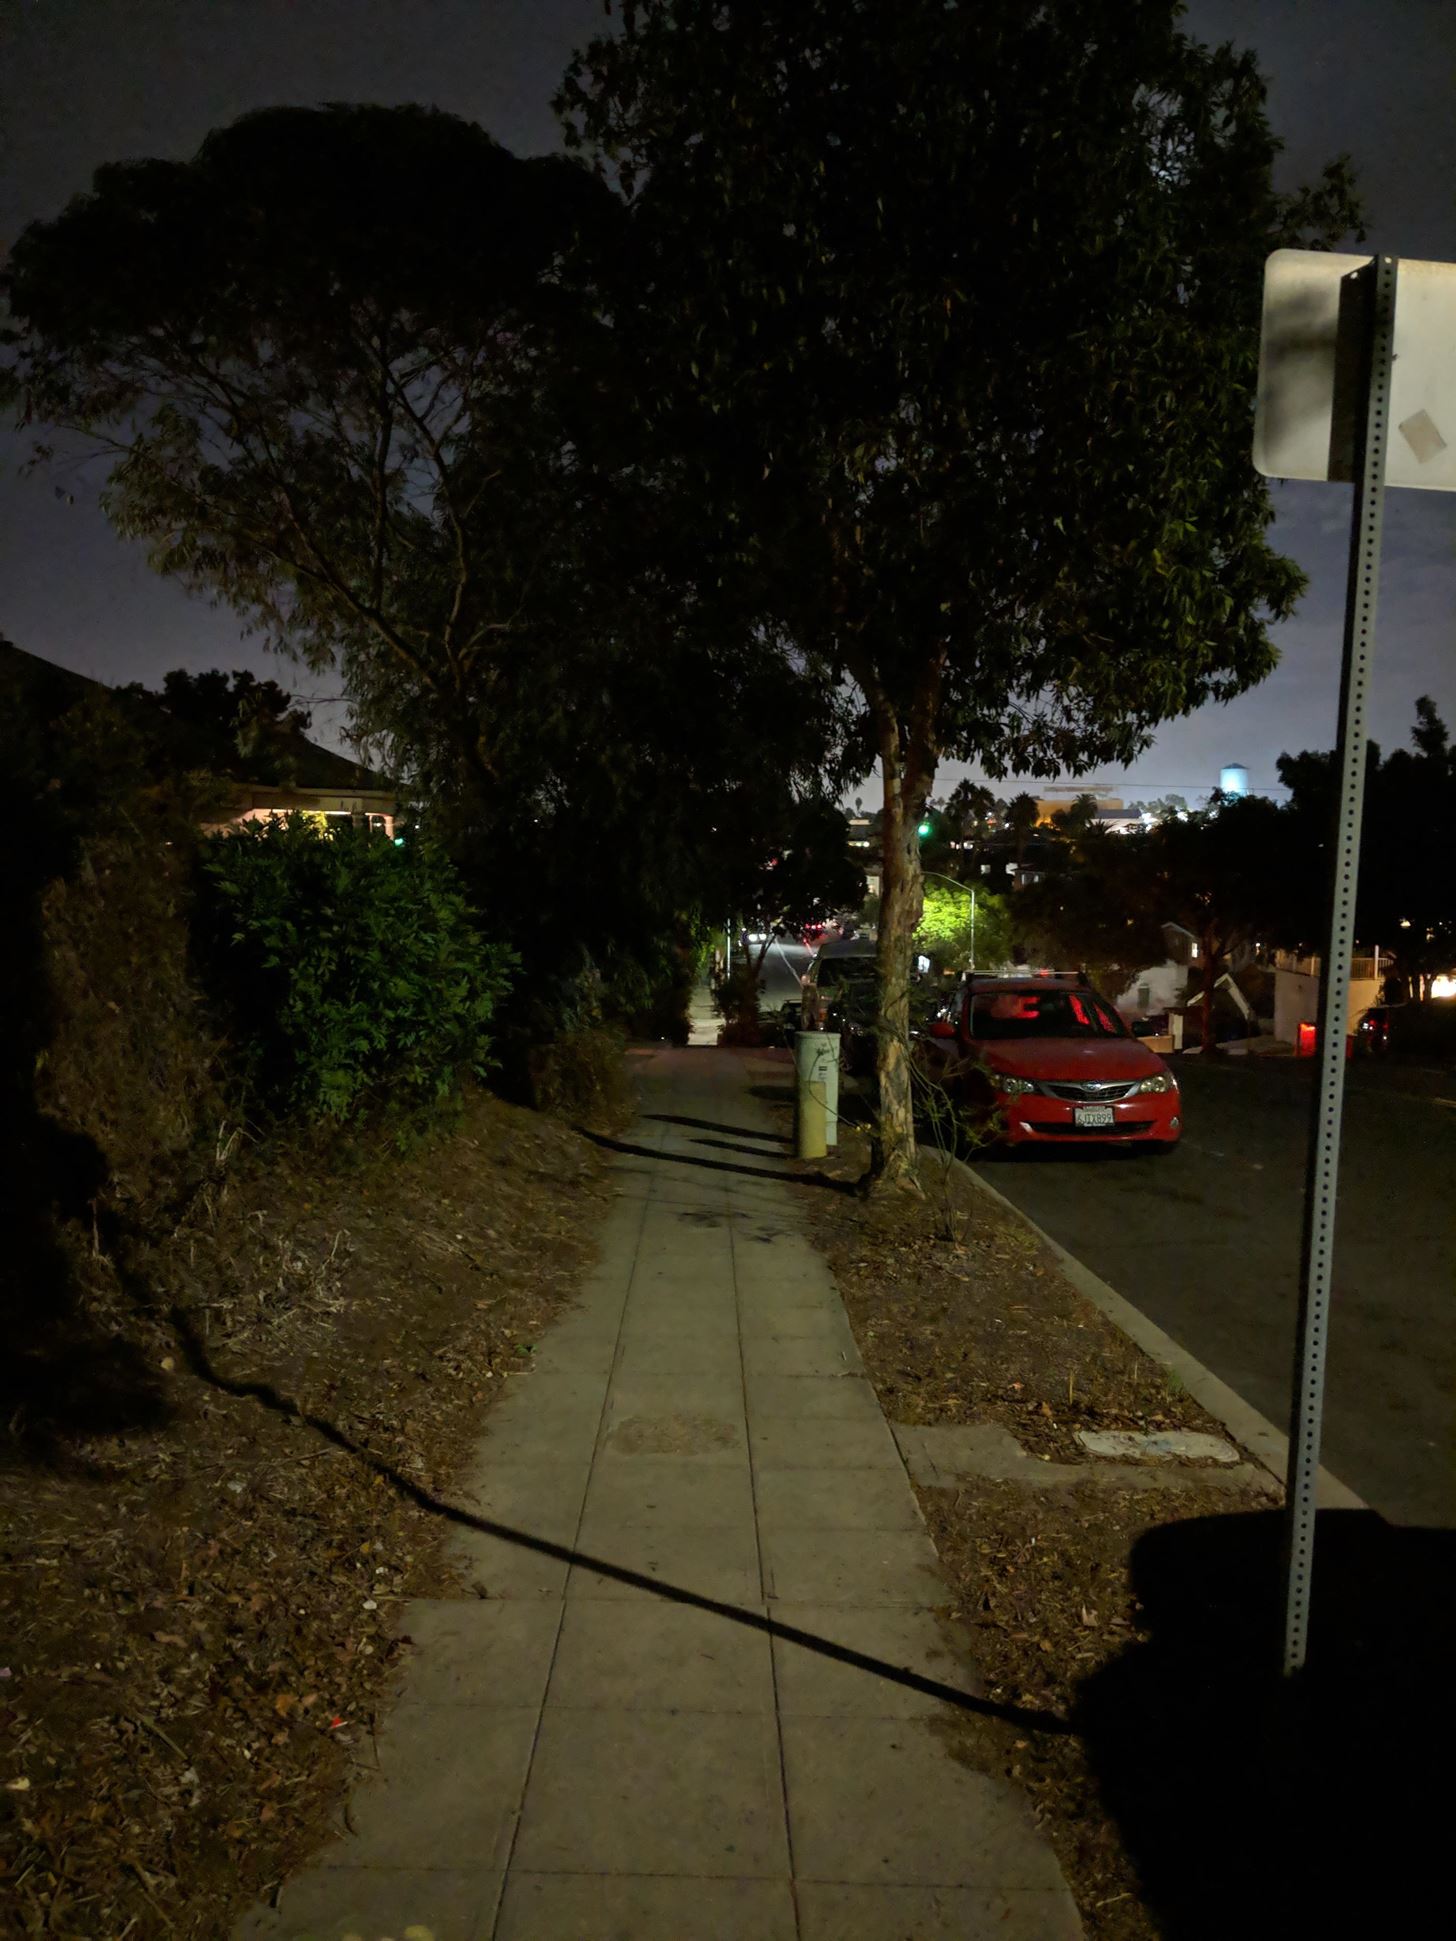 Google's Night Sight Camera Is Downright Amazing